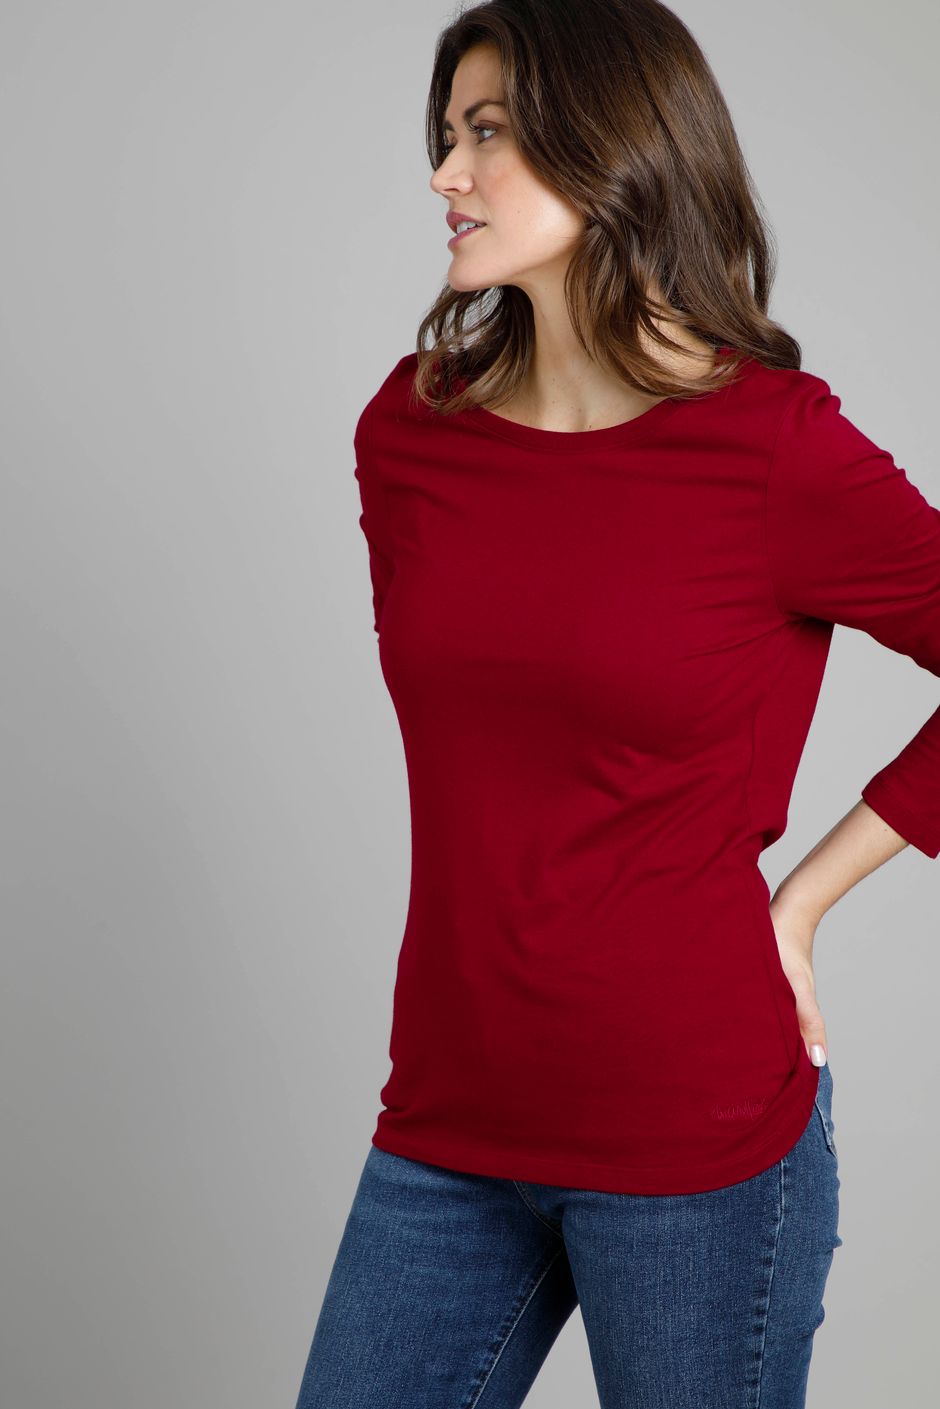 Clermont Outfitter Long Sleeve T-Shirt Garnet